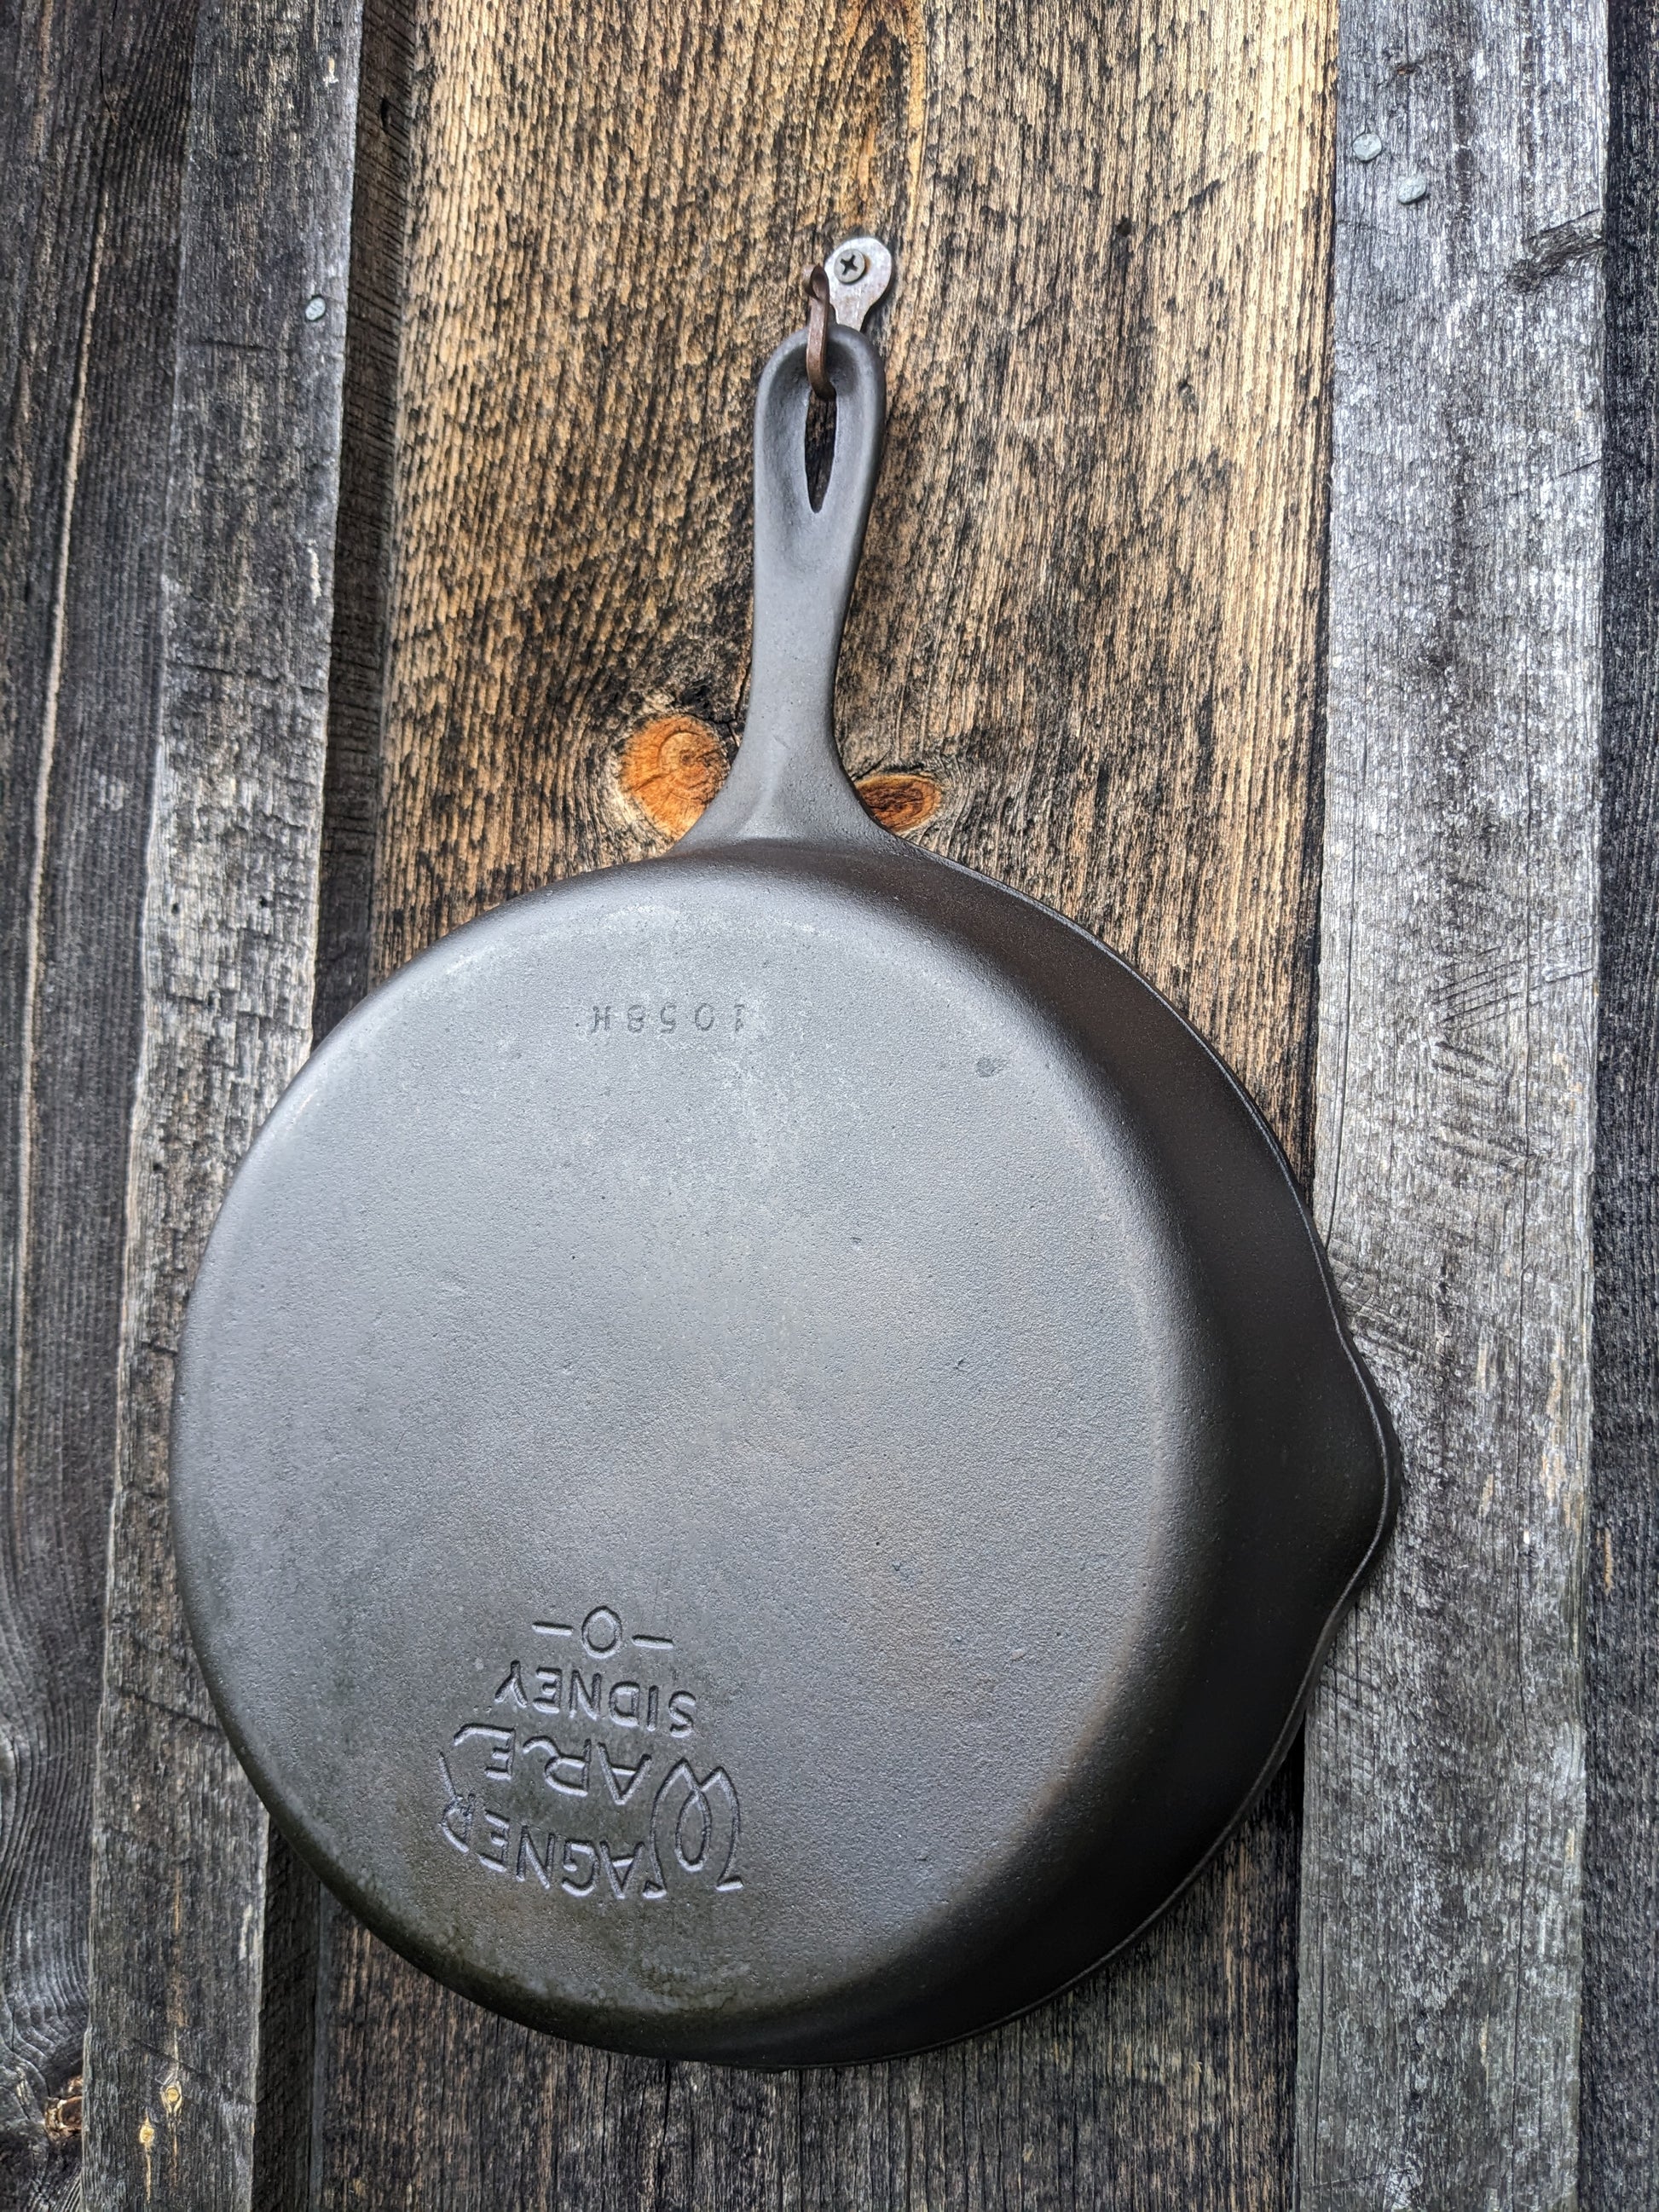 Wagner ware Sidney-0- #8 cast iron skillet Chicken fryer, USA 1088B